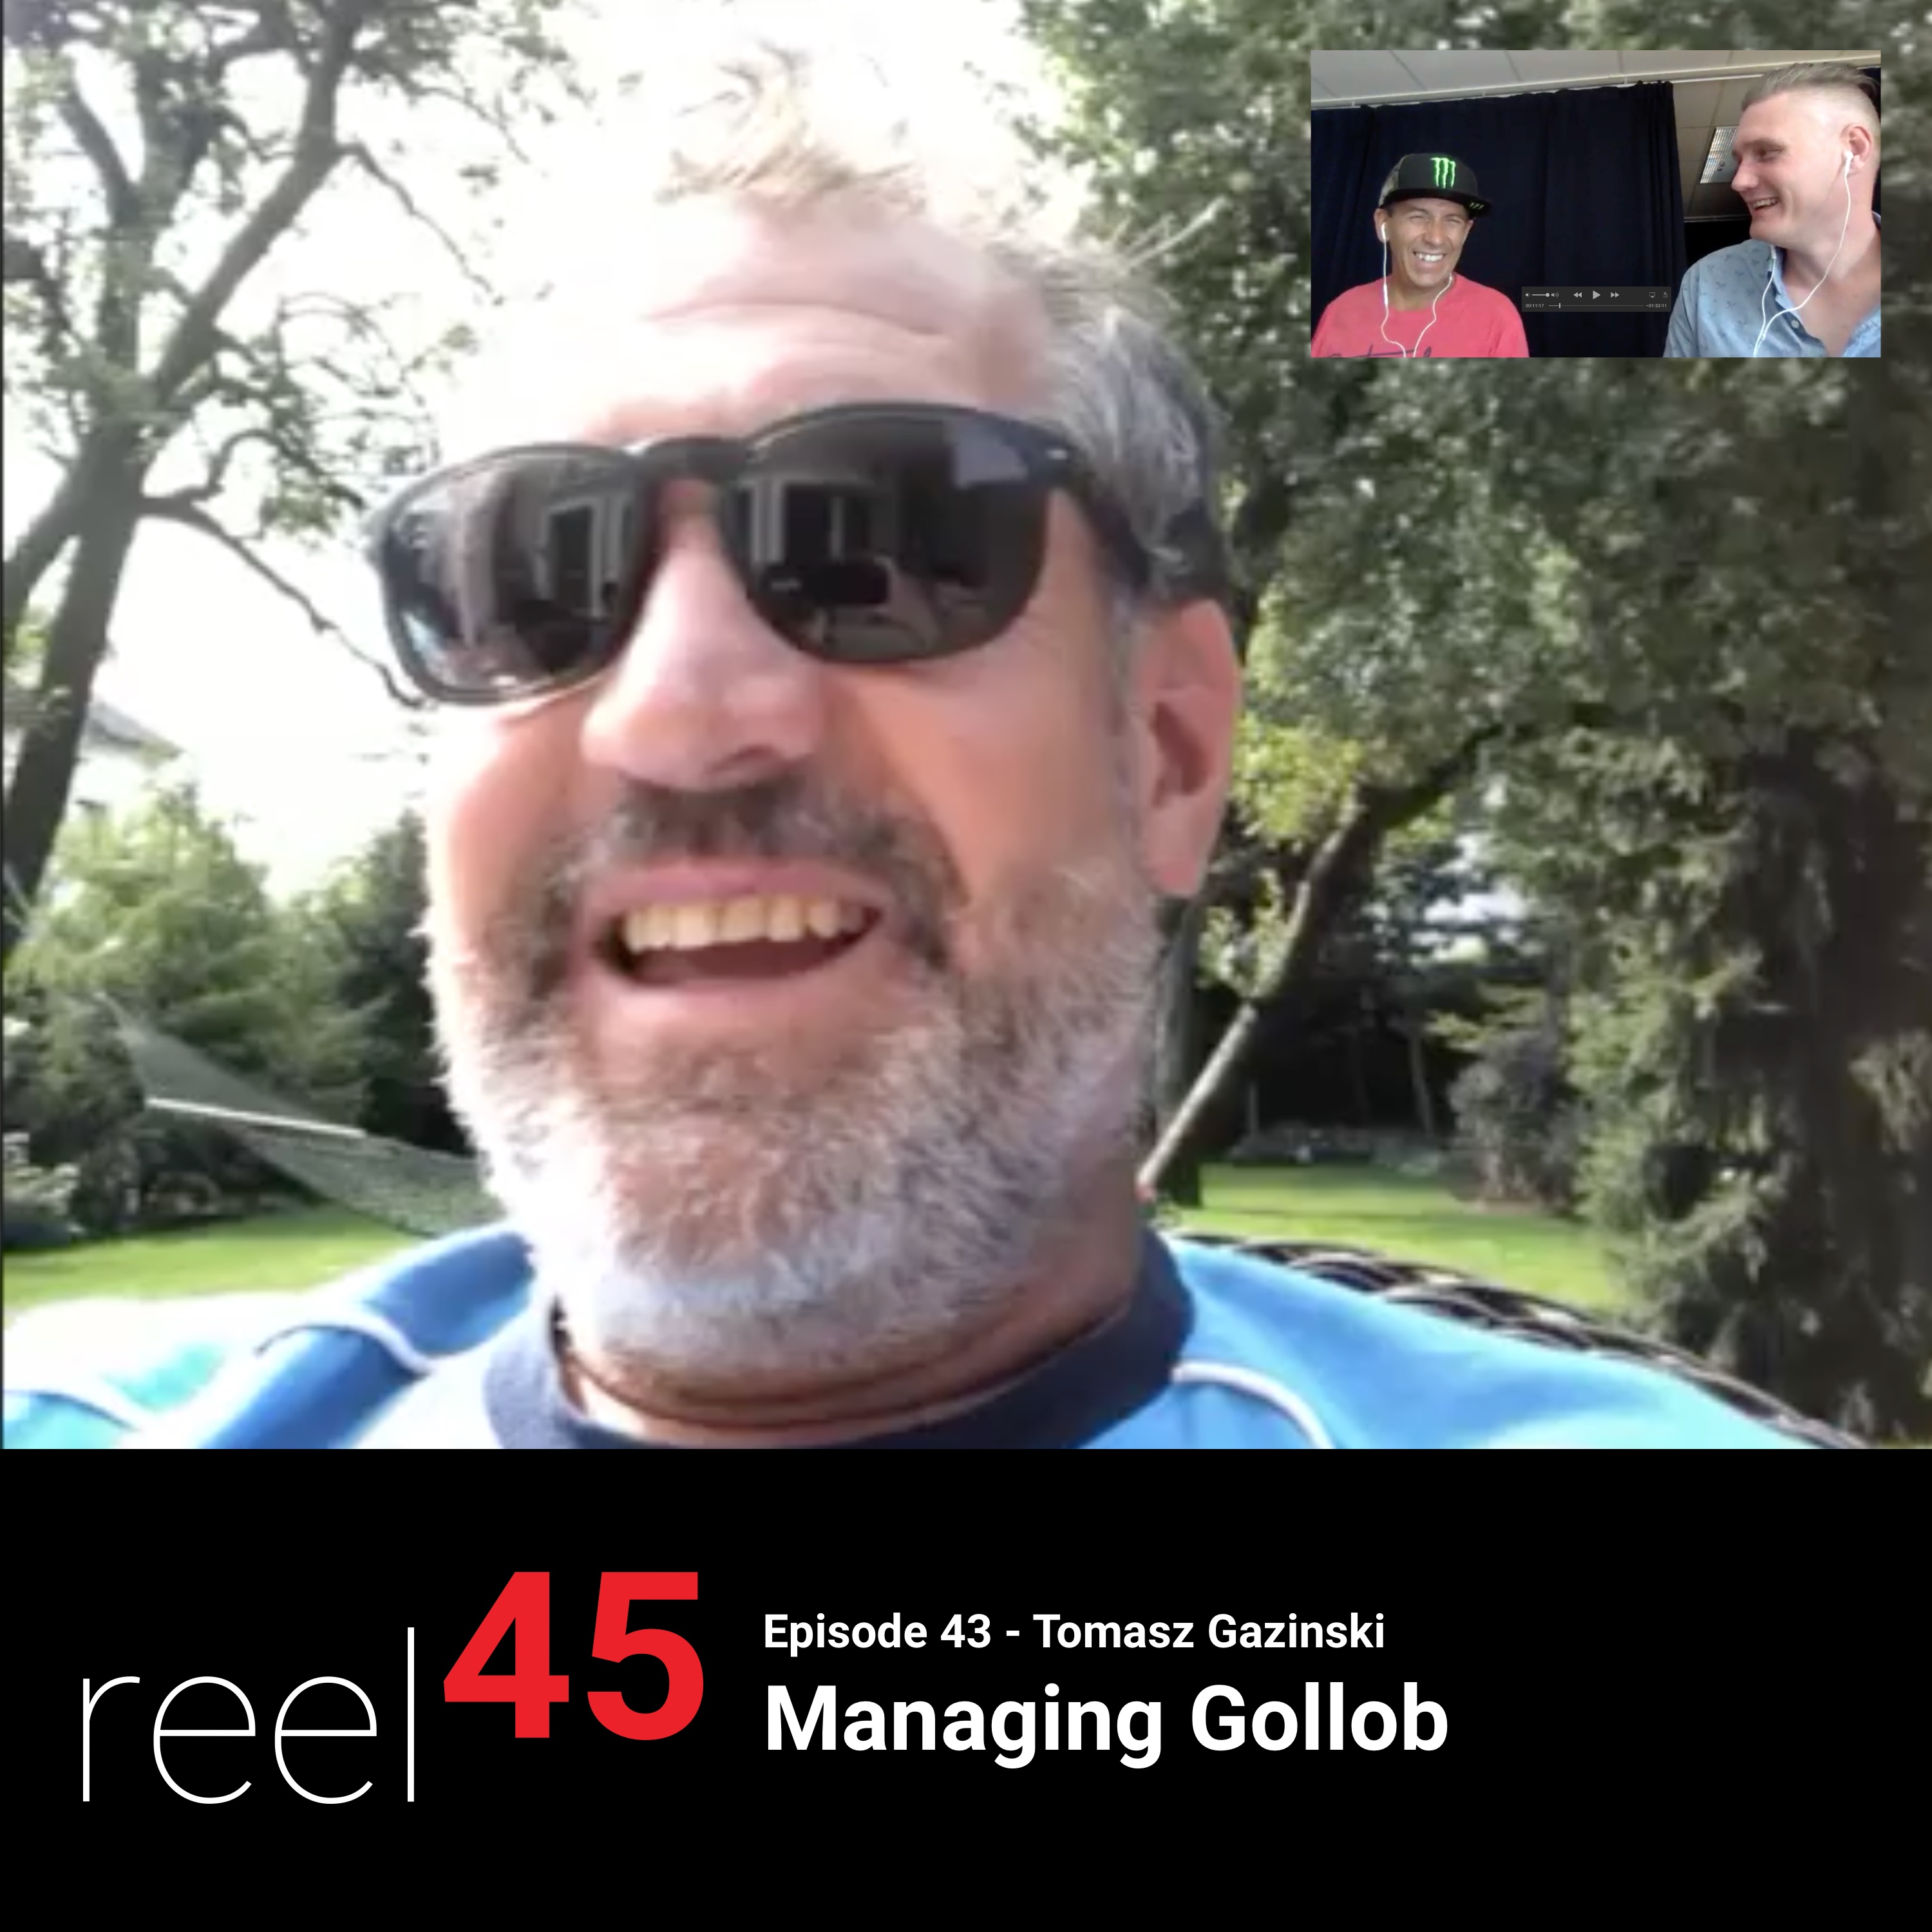 Episode 43 - Managing Gollob with Tomasz Gazinski